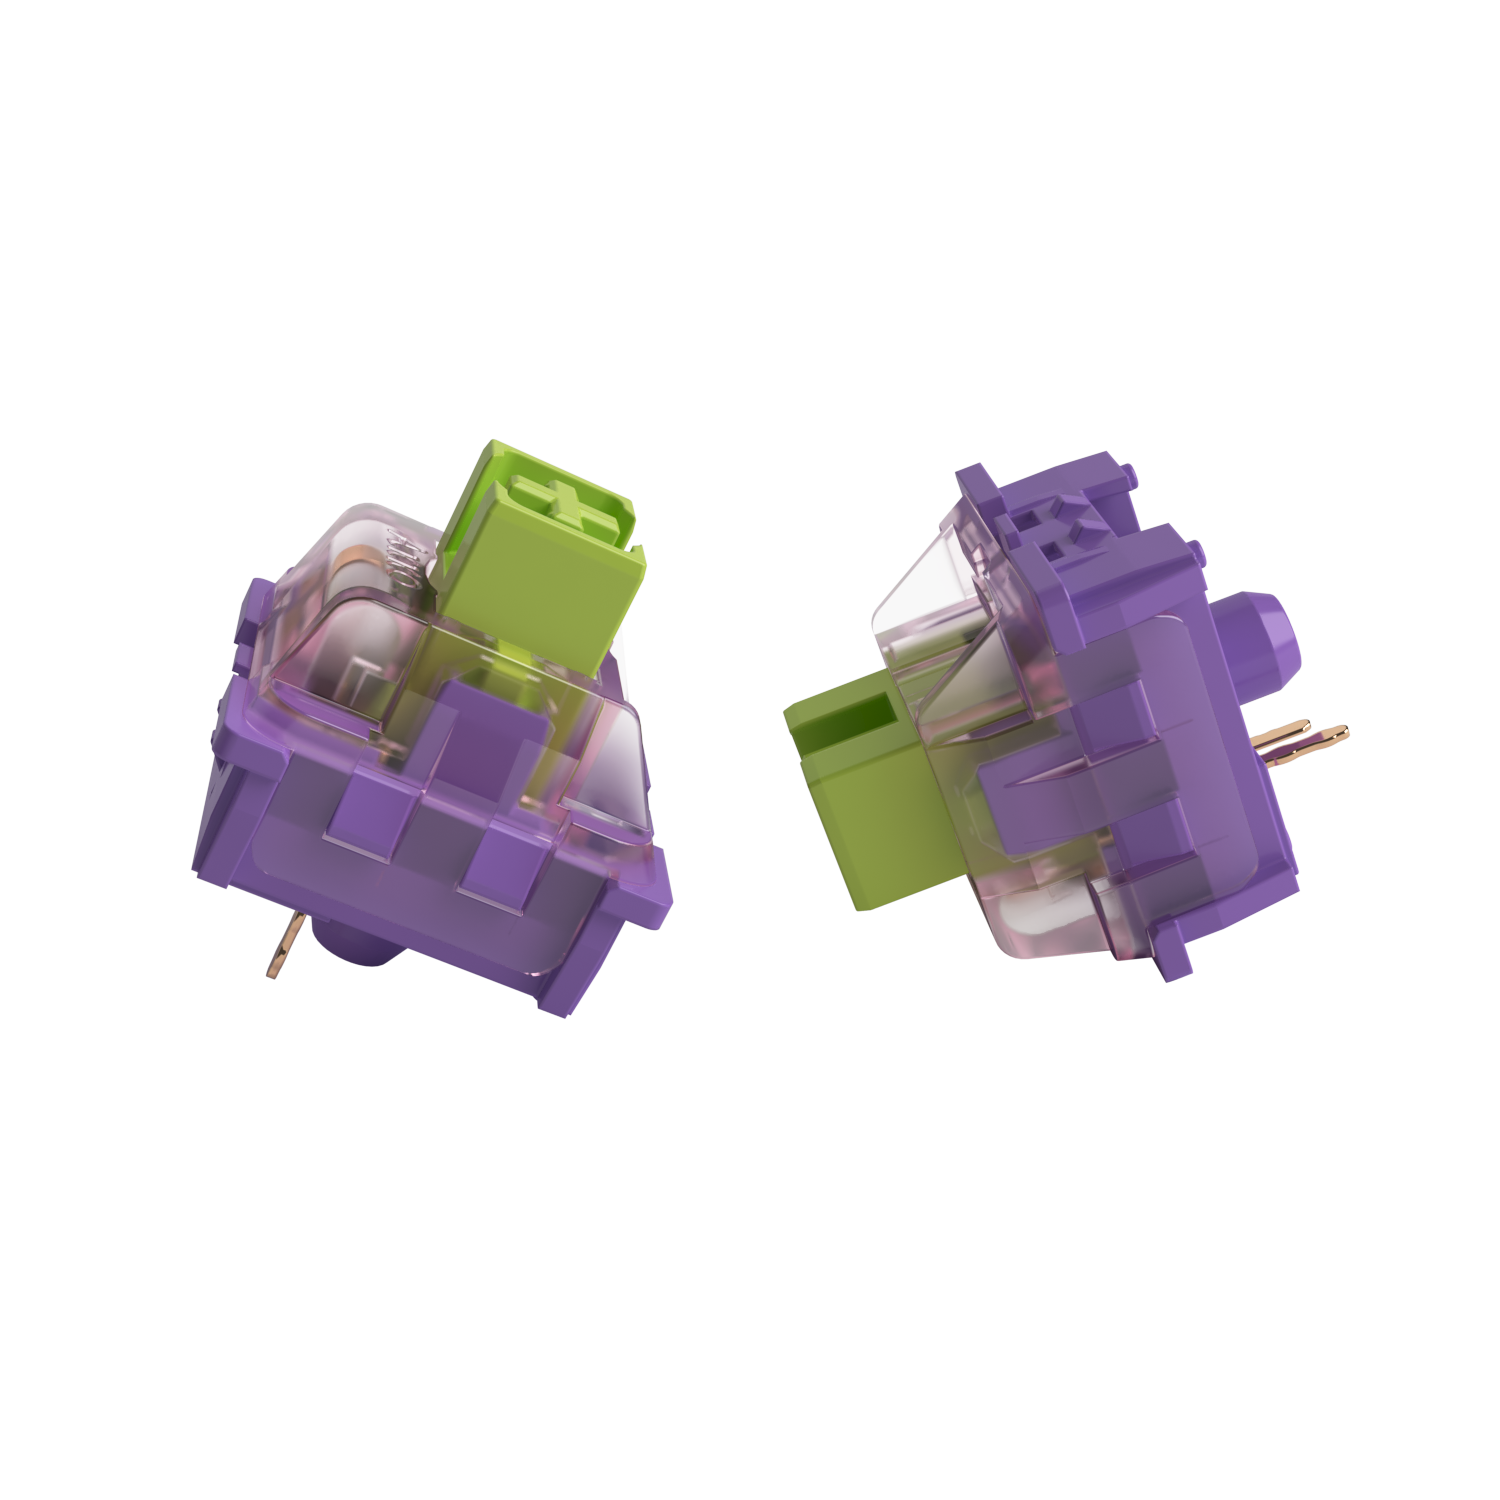 Cs jelly. Akko tactile Switches. Набор переключателей Akko CS Switch (45 шт) Jelly Lavender. Akko CS Switch. Akko CS Jelly Pink.